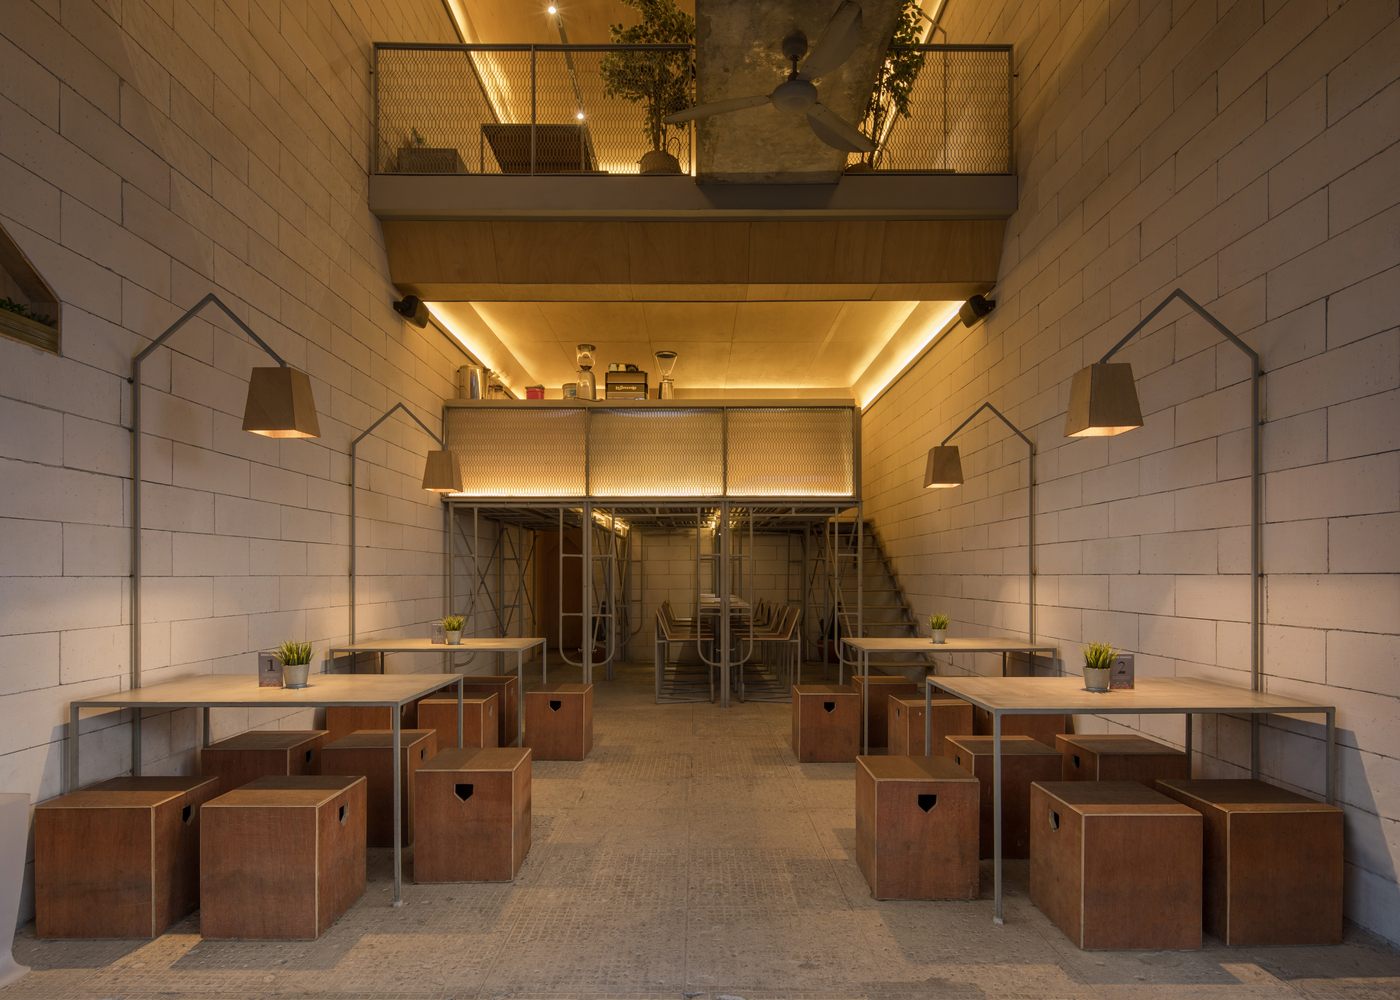 The Interior Design of Seven Degrees Restaurant